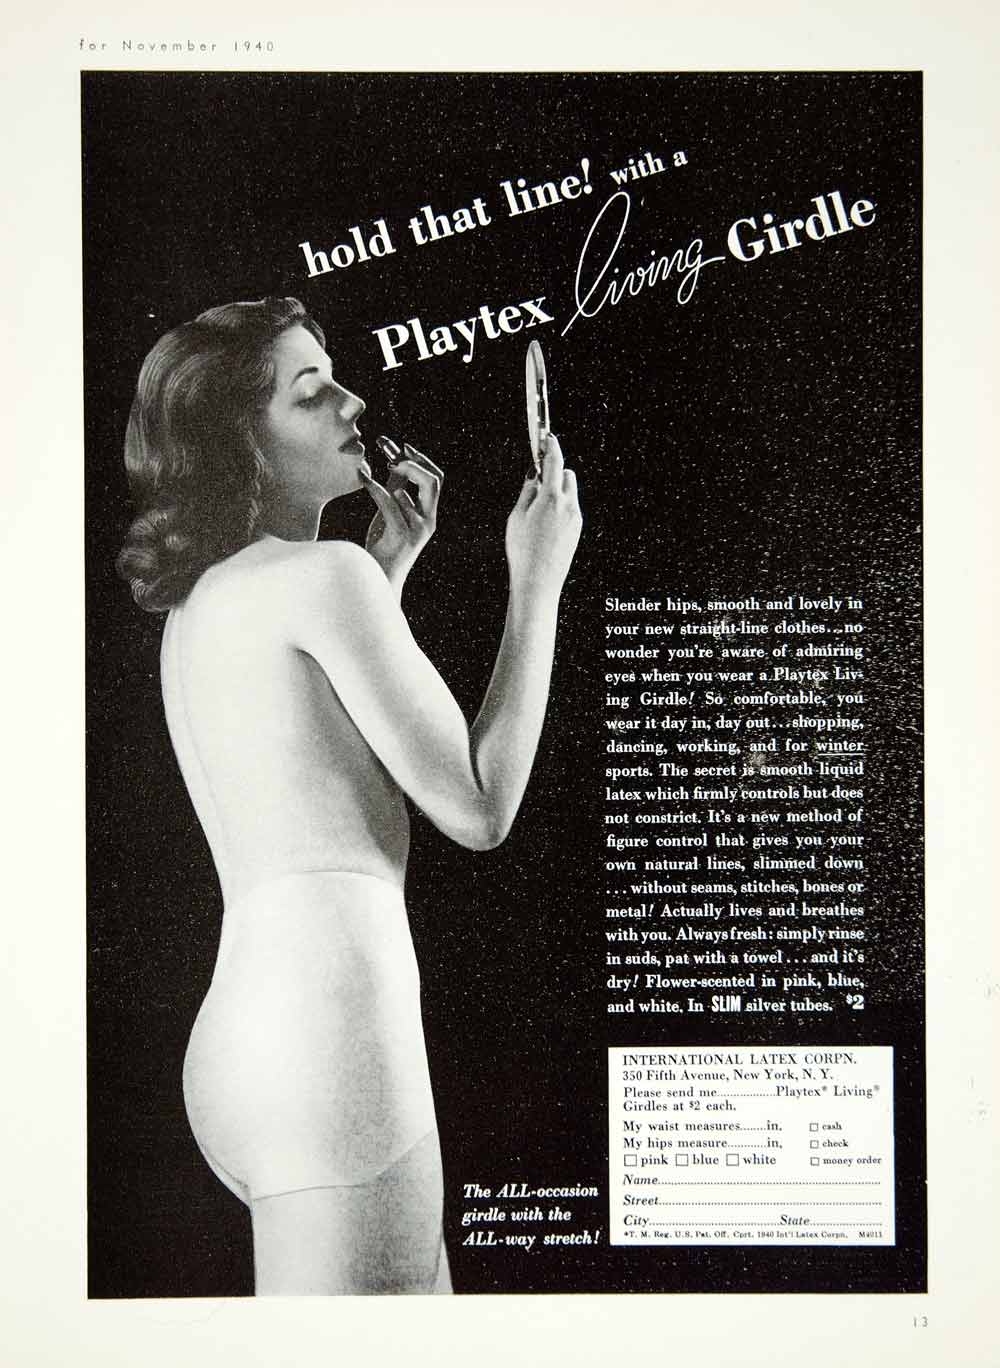 1941 Ad Playtex Living Girdle Women Foundation Garment 40s Fashion